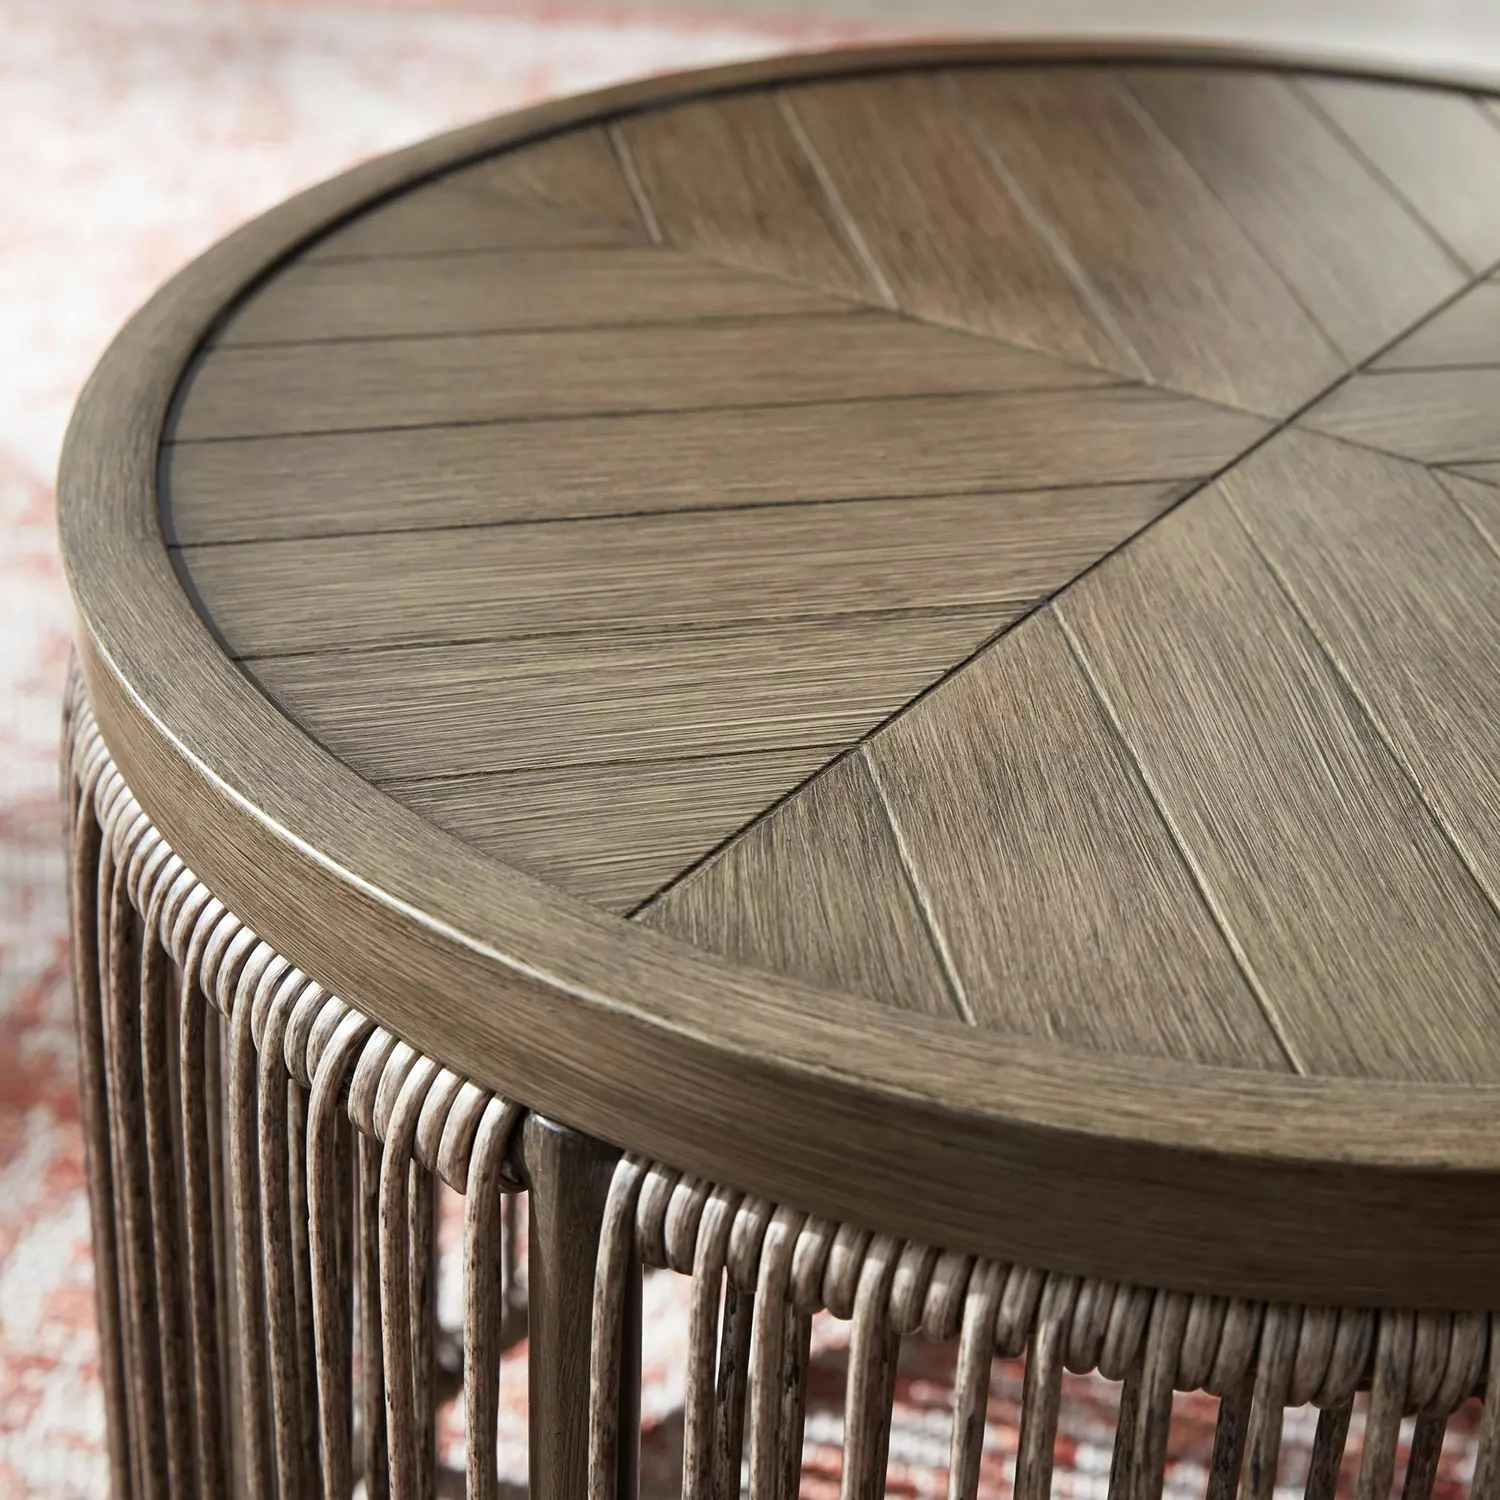 top wood grain of a boho side table